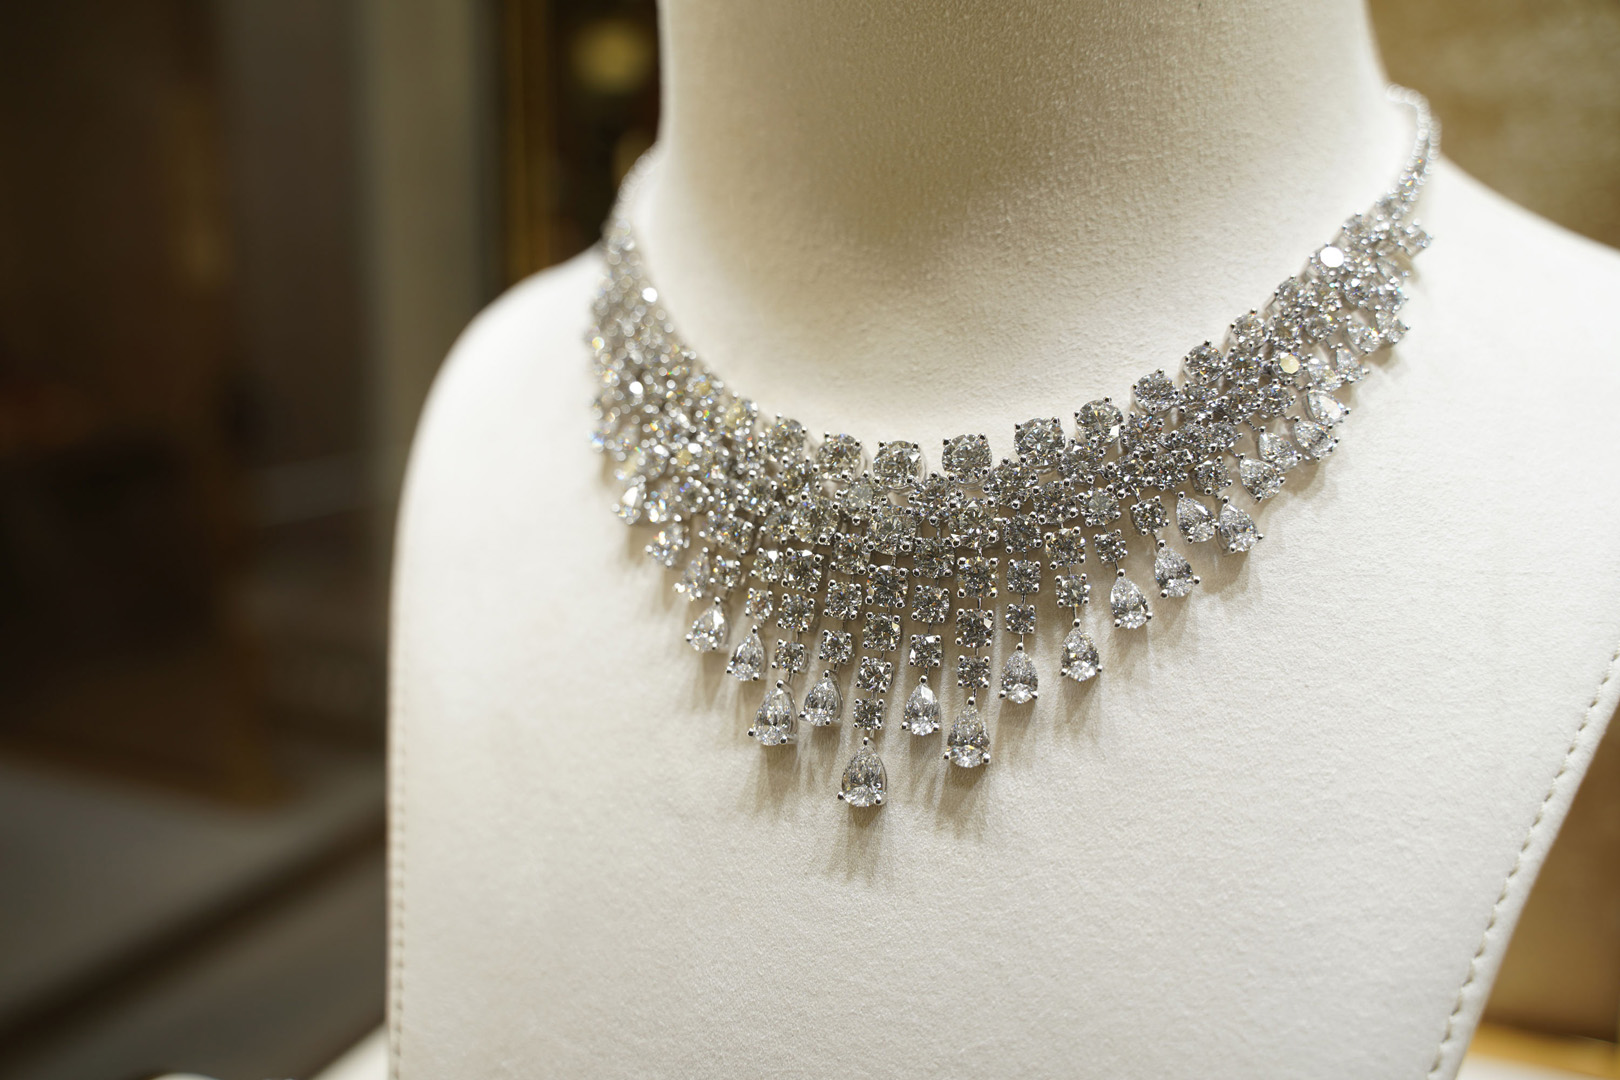 Diamond necklace on display